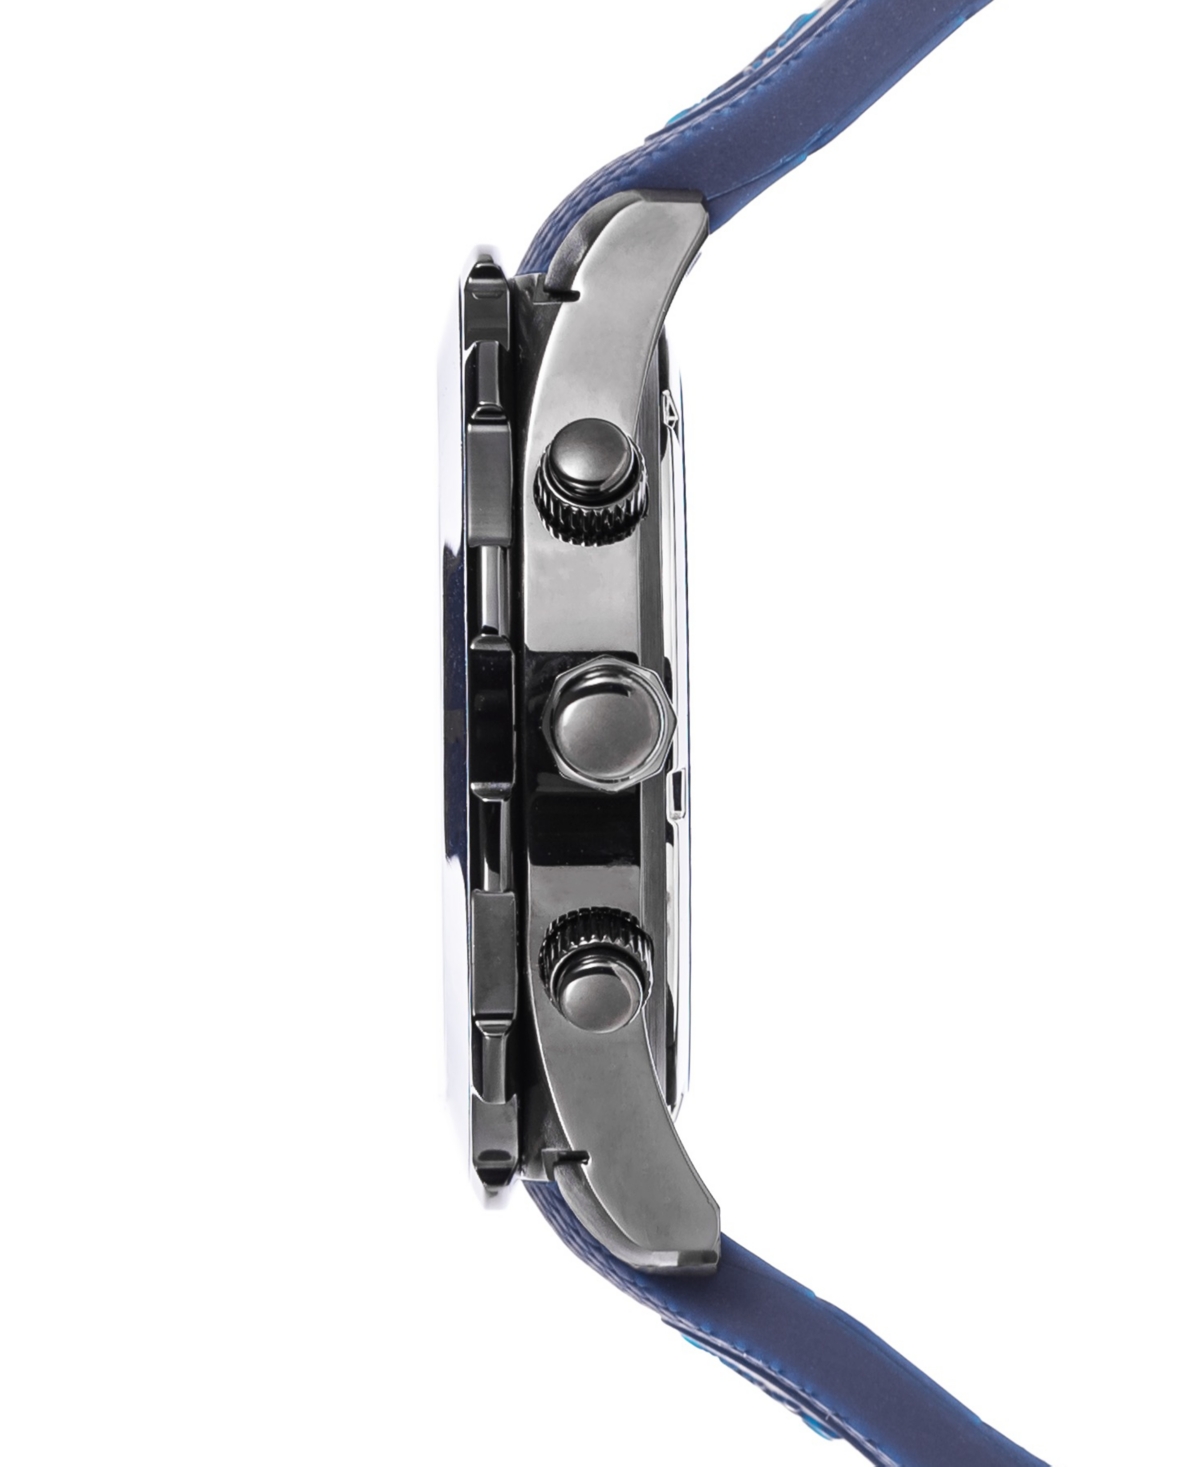 Shop Strumento Marino Men's Dual Time Zone Skipper Blue Silicone Strap Watch 44mm, Created For Macy's In Gun Metal  Blue